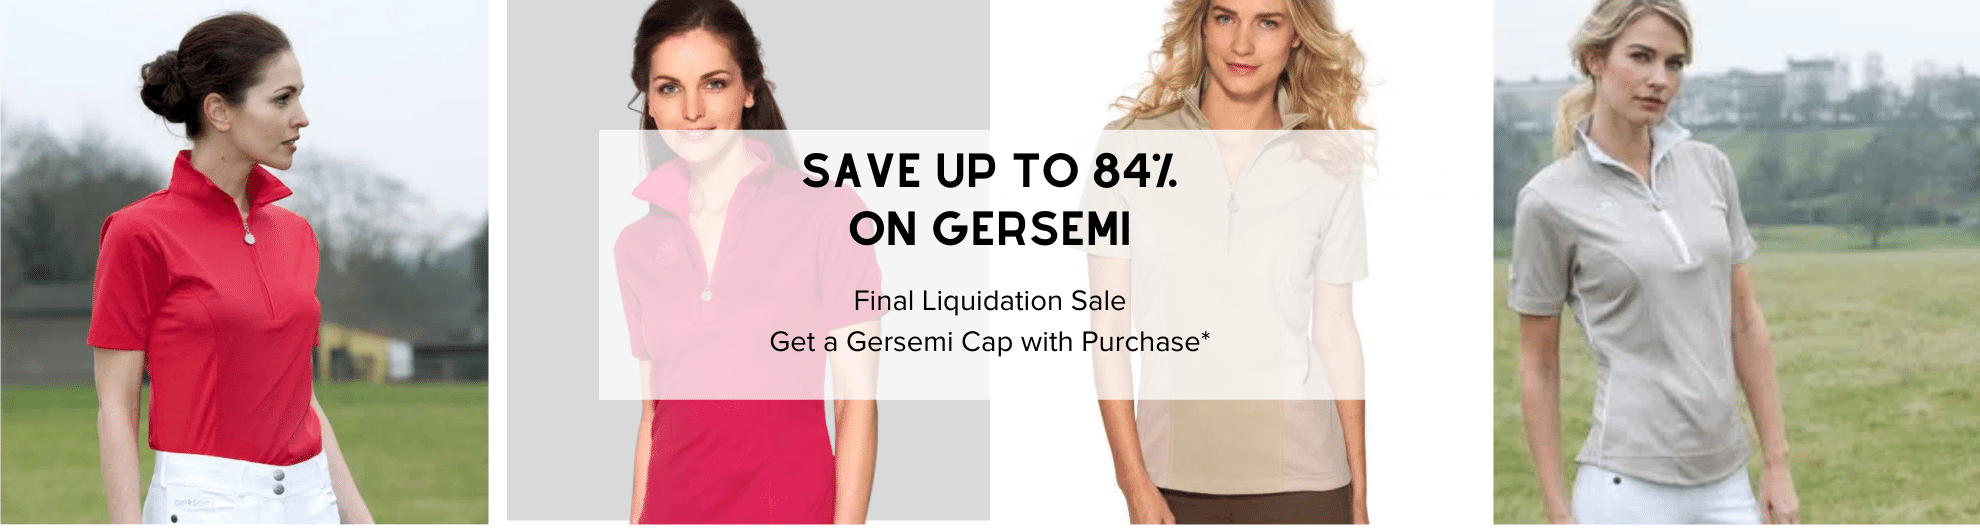 Gersemi Liquidation Sale